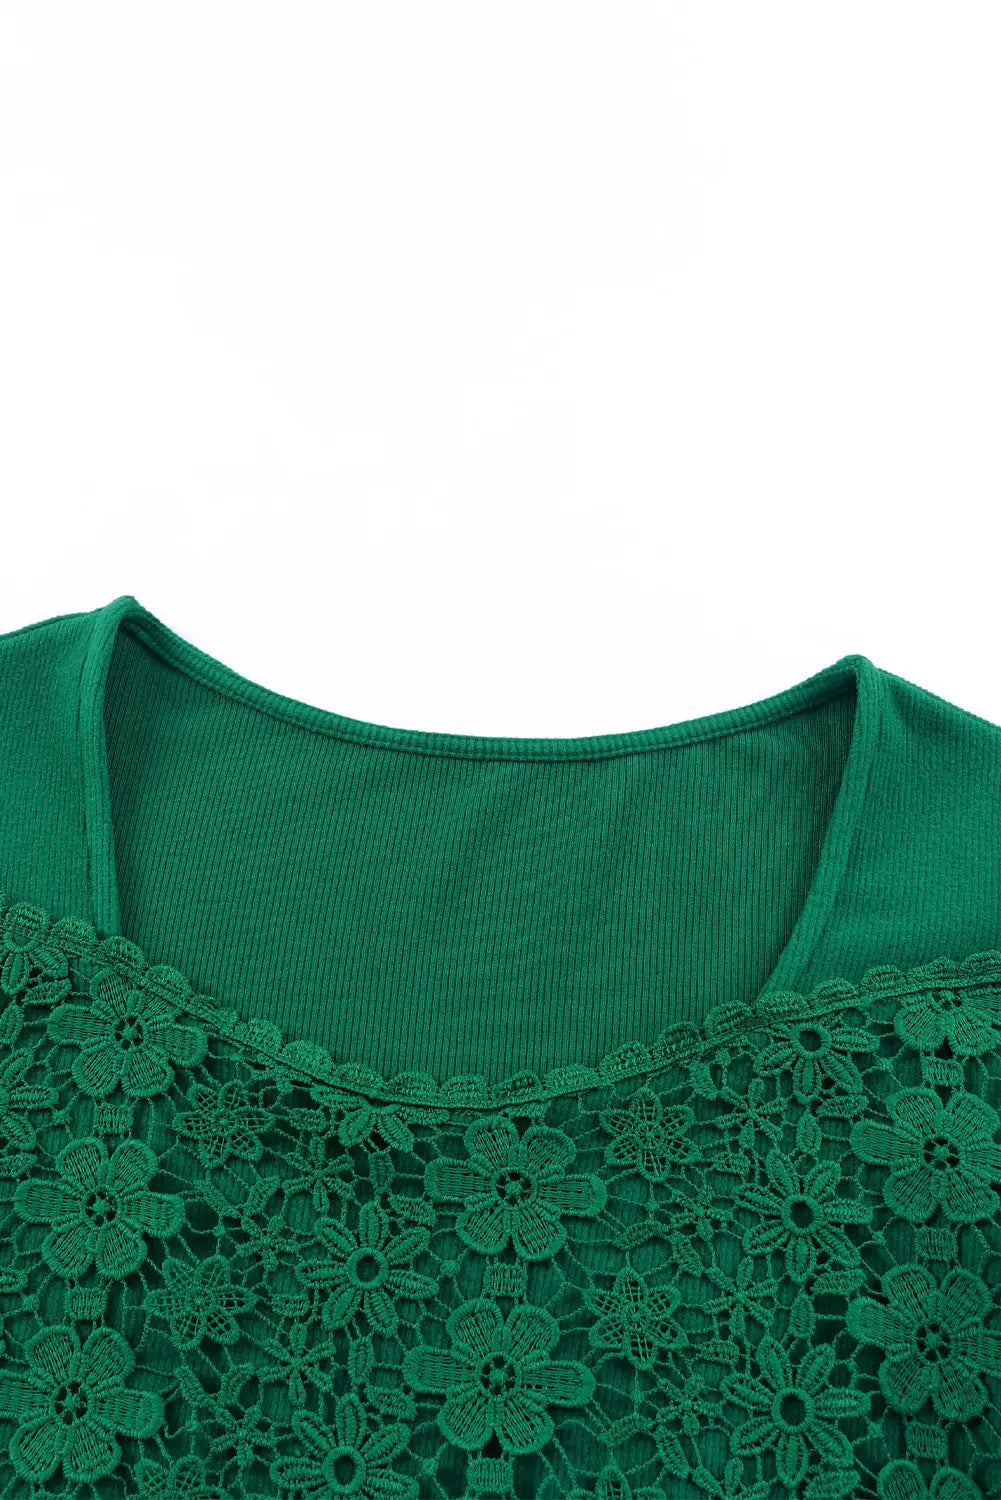 Beige lace crochet v neck long sleeve top - tops